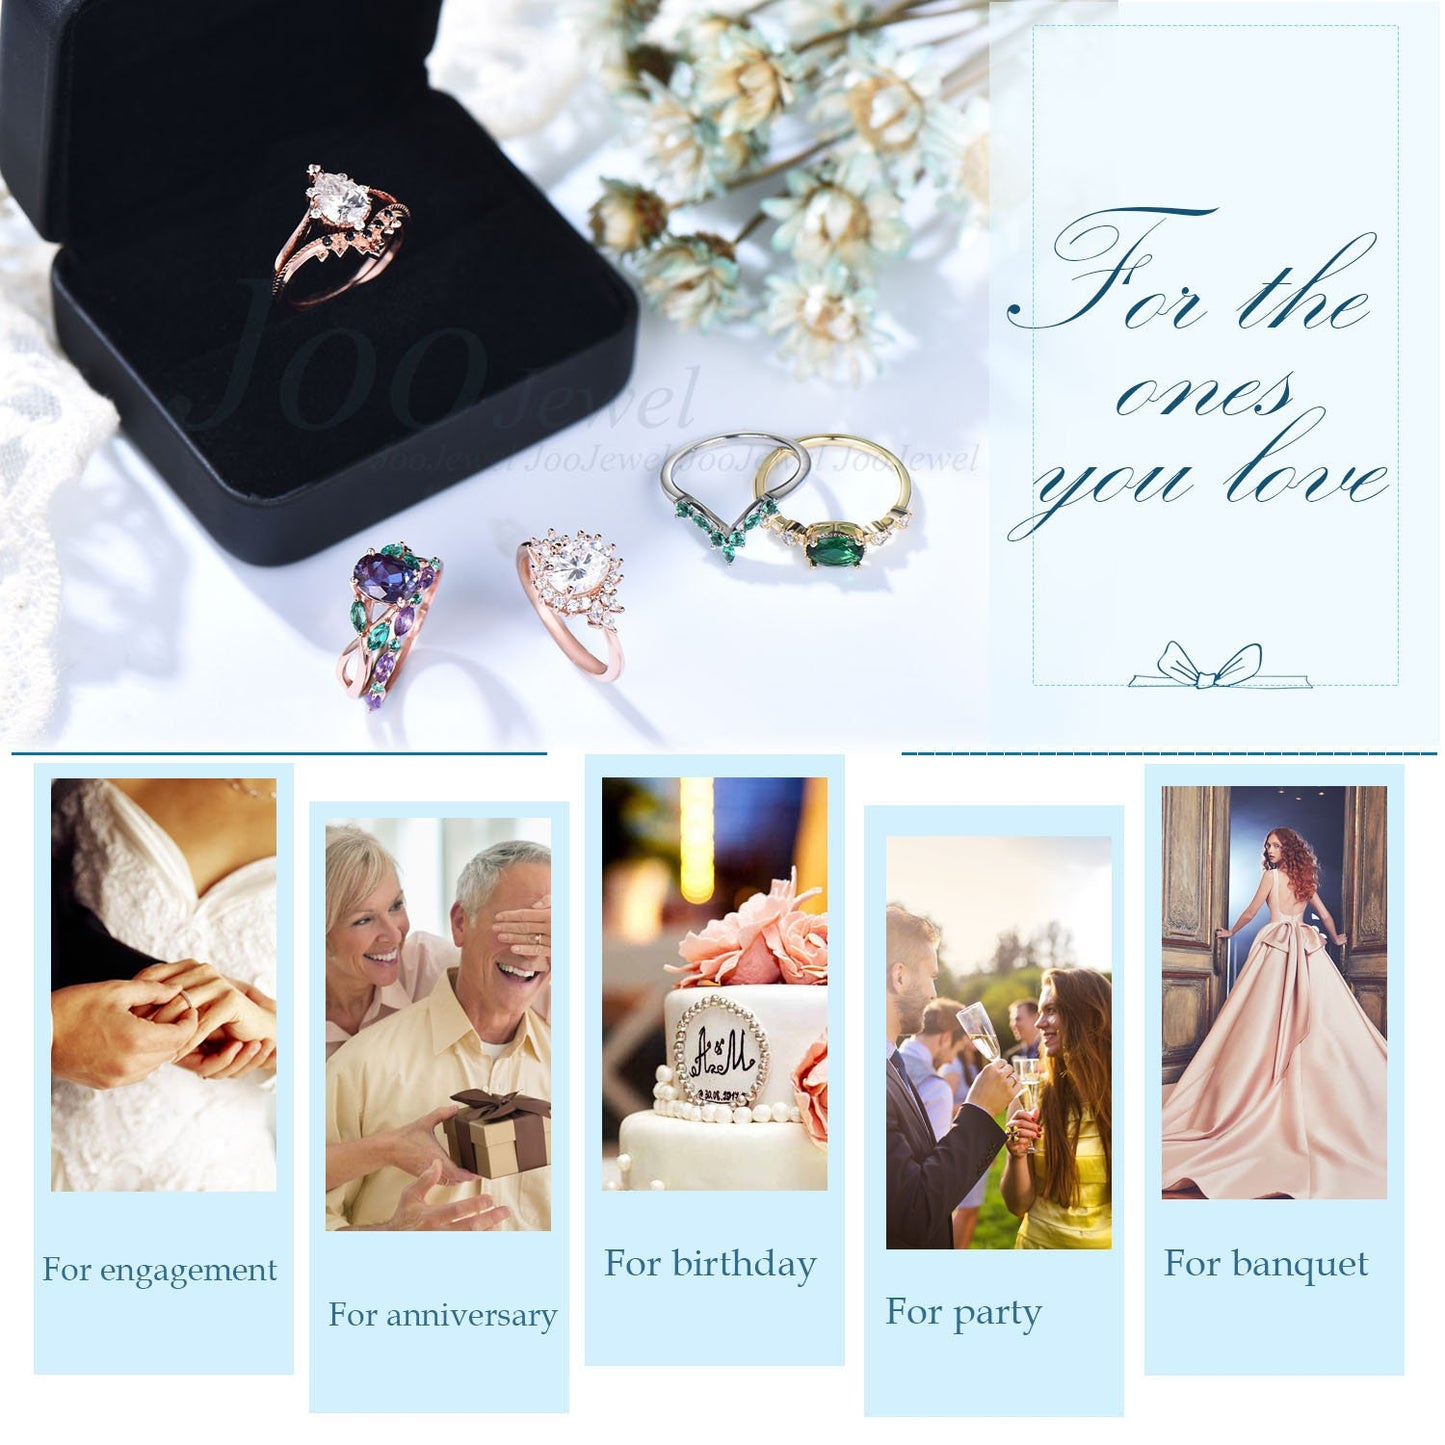 Noble Royal Oval Blue Sapphire Diamond Necklace 14K Rose Gold Double Halo Moissanite Wedding Bridal Pendant Unique September Birthstone Gift